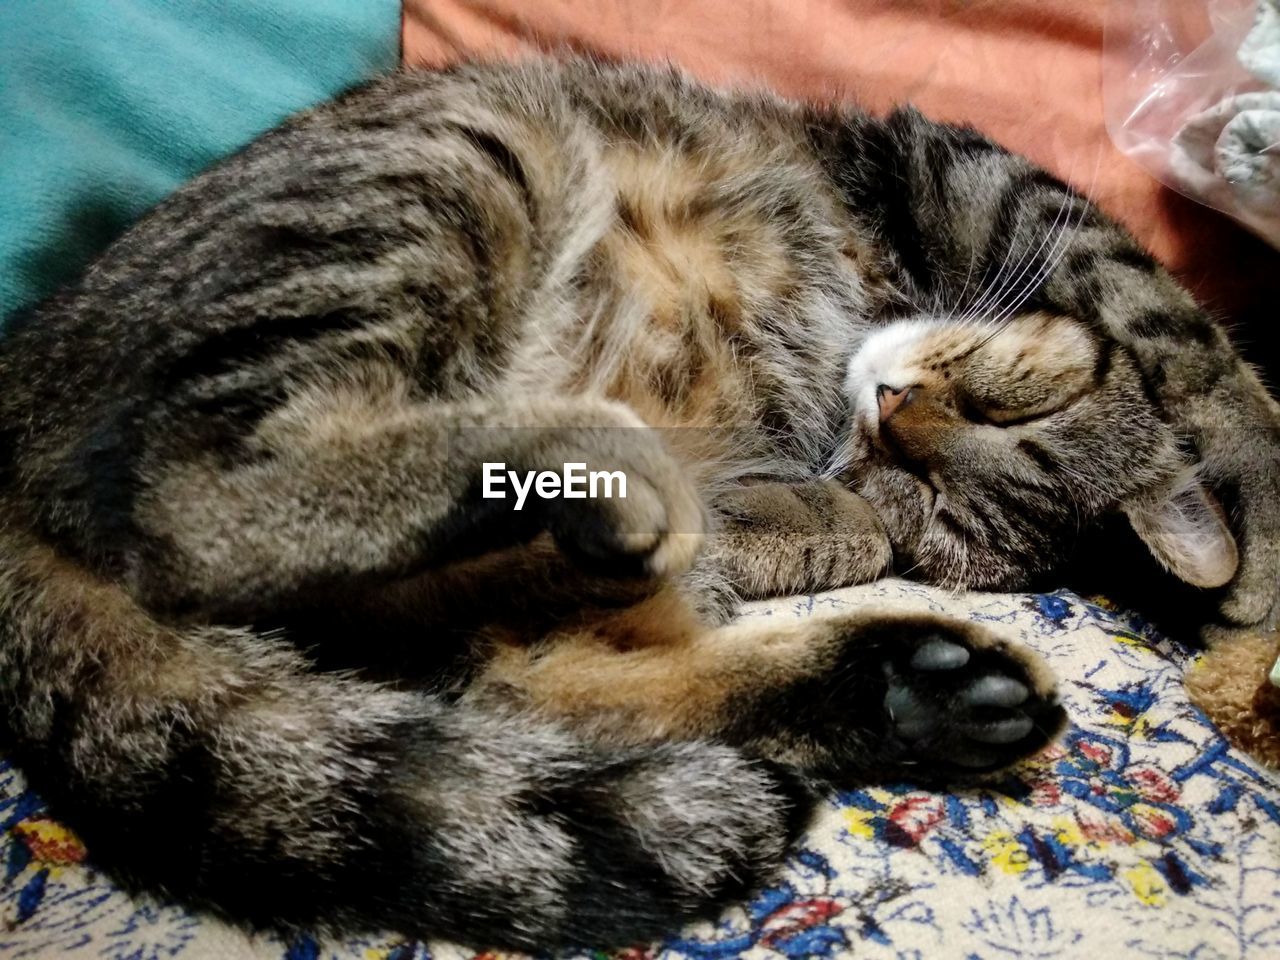 CLOSE-UP OF SLEEPING CAT